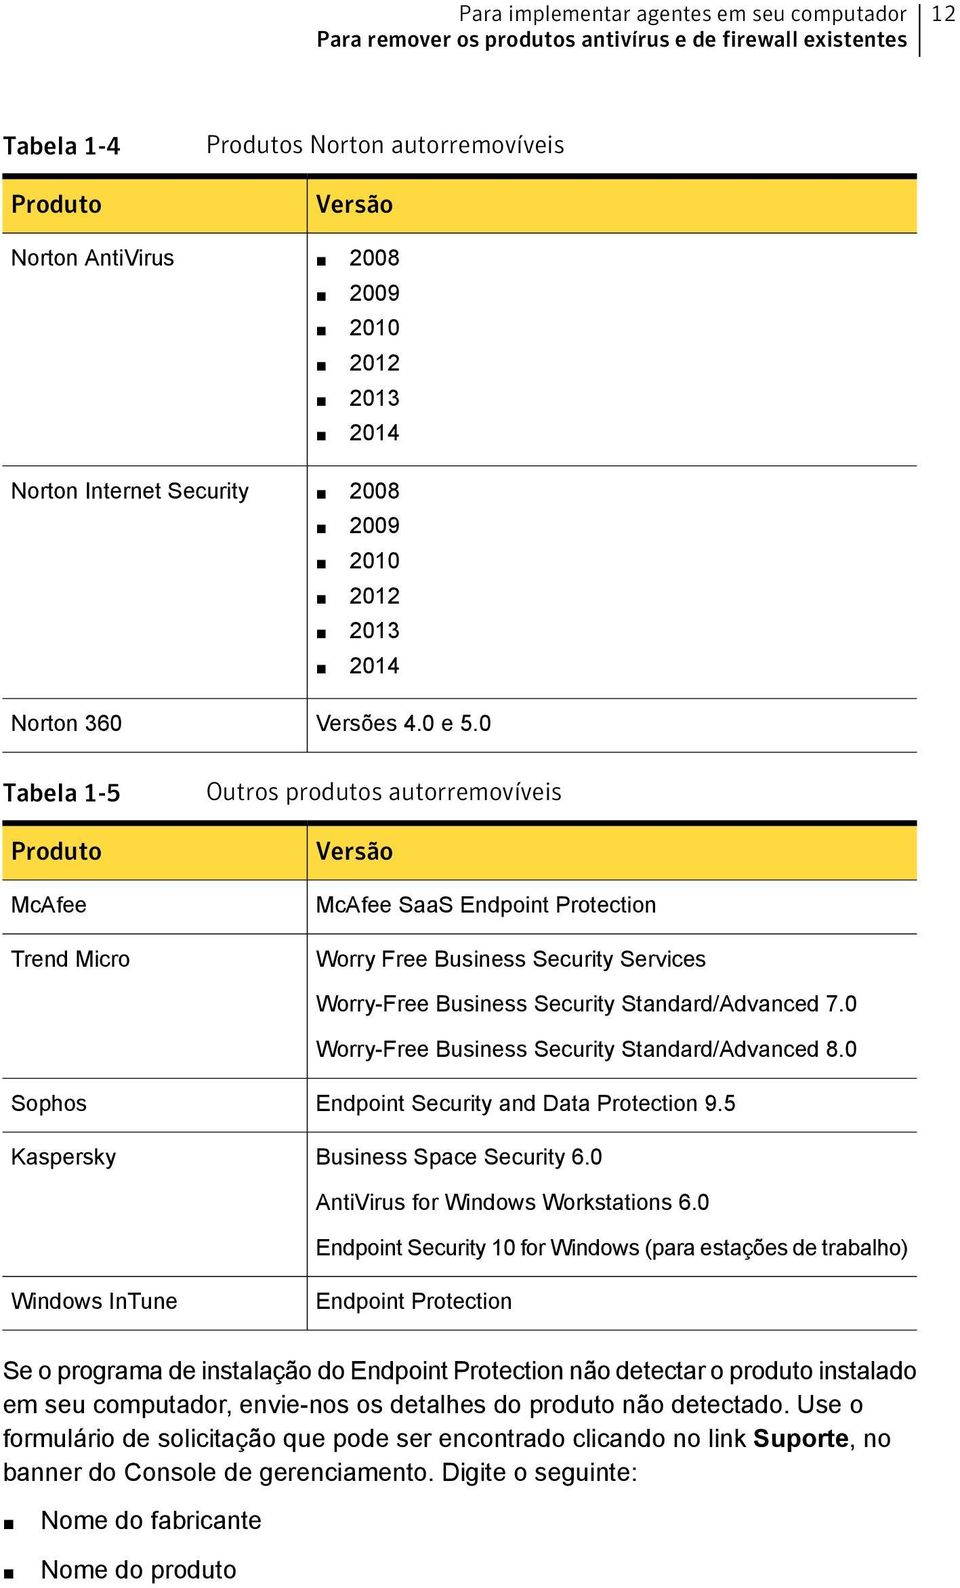 0 Tabela 1-5 Produto McAfee Trend Micro Outros produtos autorremovíveis Versão McAfee SaaS Endpoint Protection Worry Free Business Security Services Worry-Free Business Security Standard/Advanced 7.